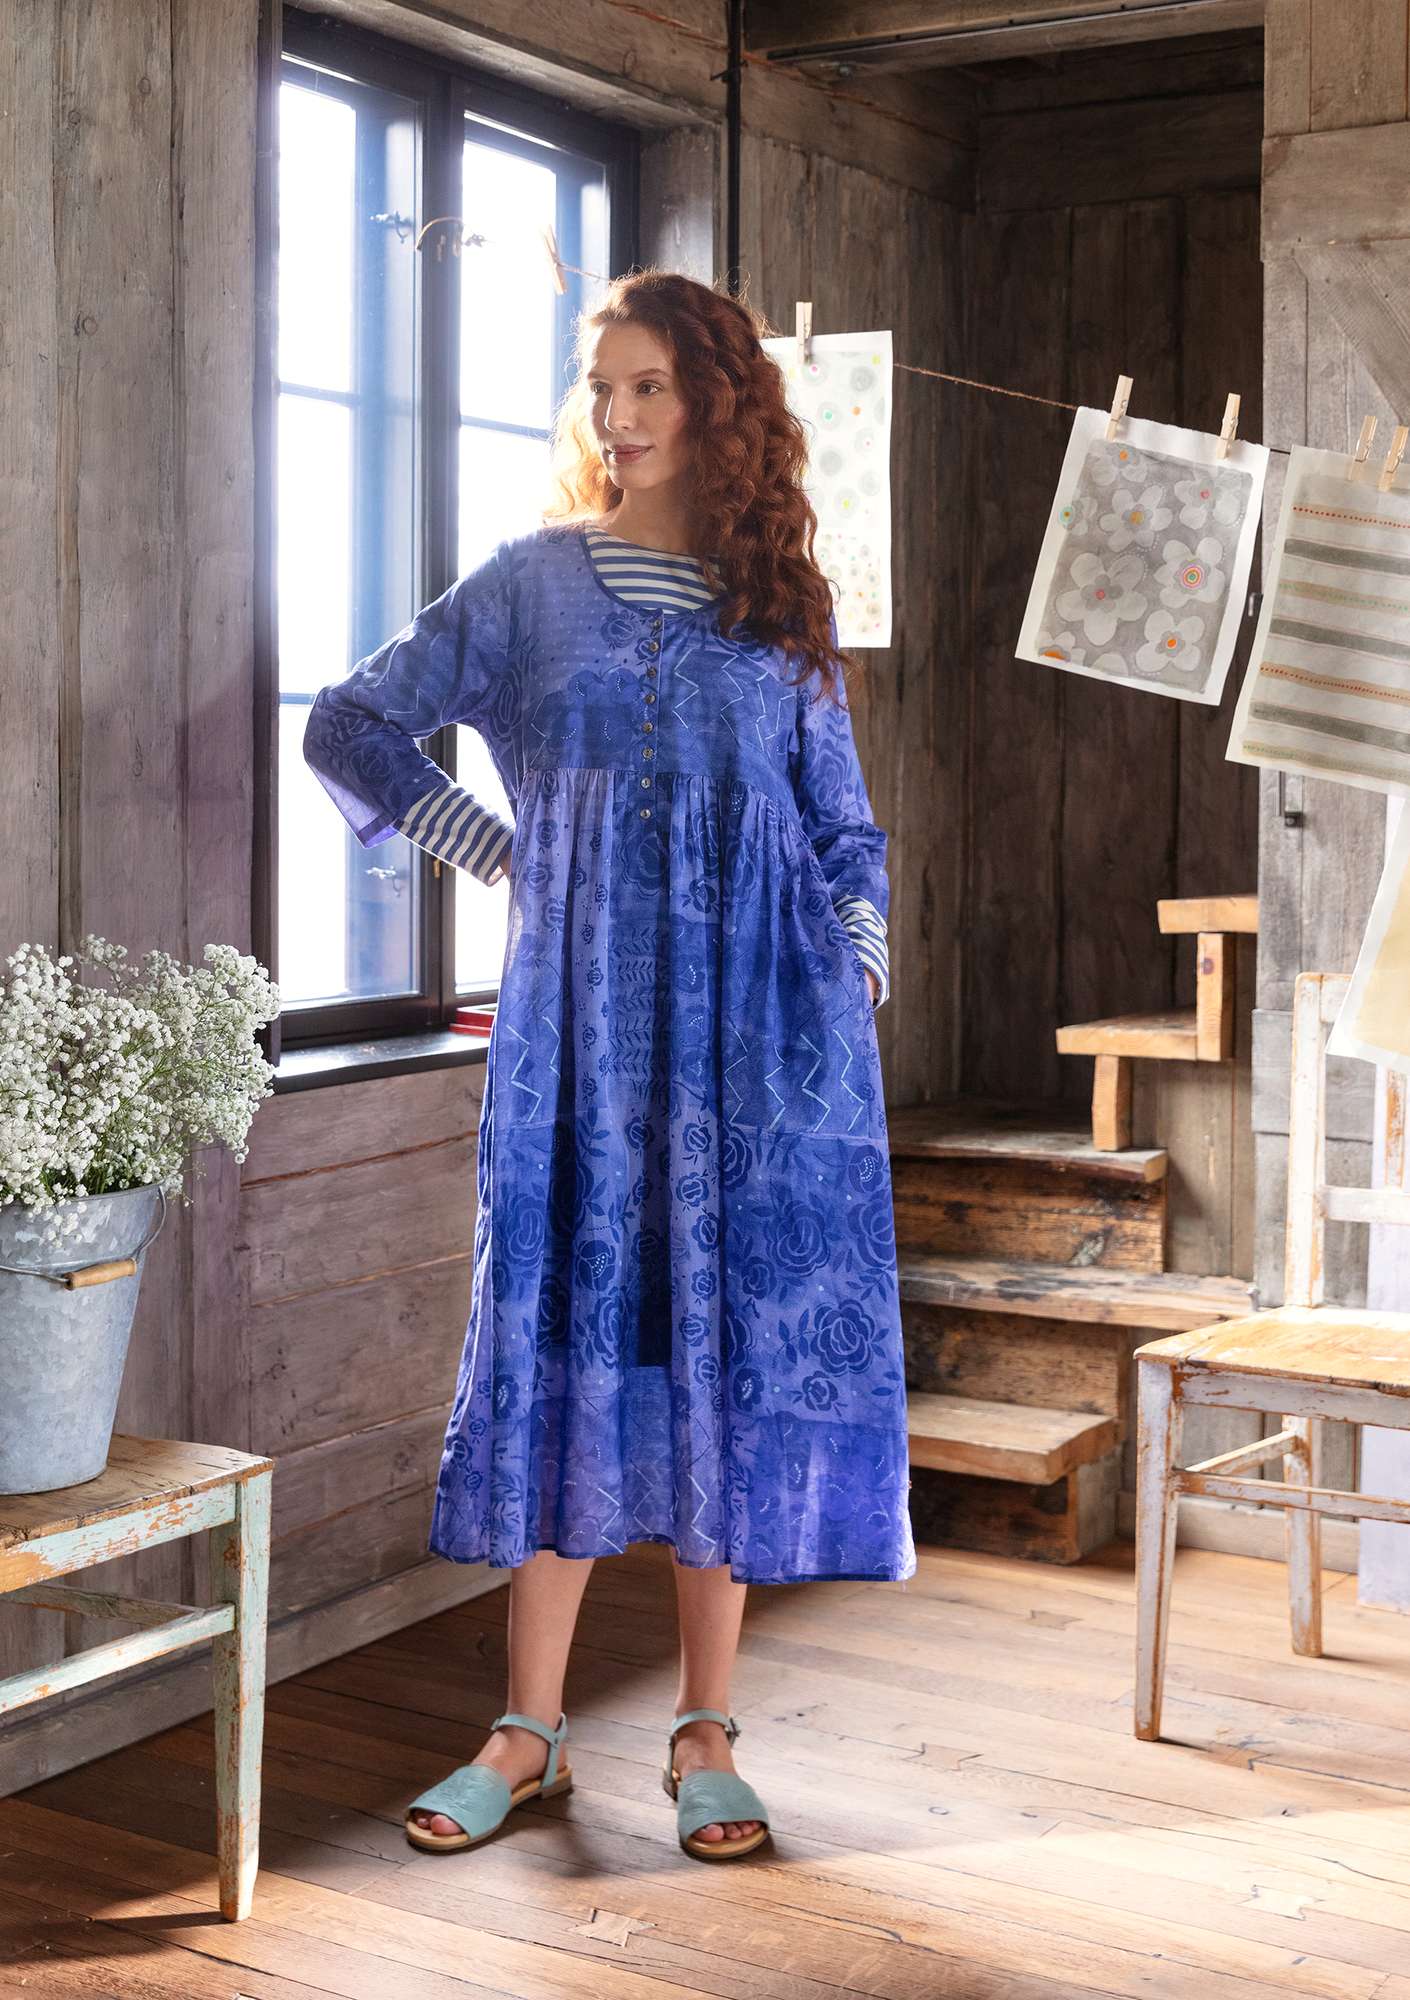 “Rosewood” woven dress in organic cotton lupin